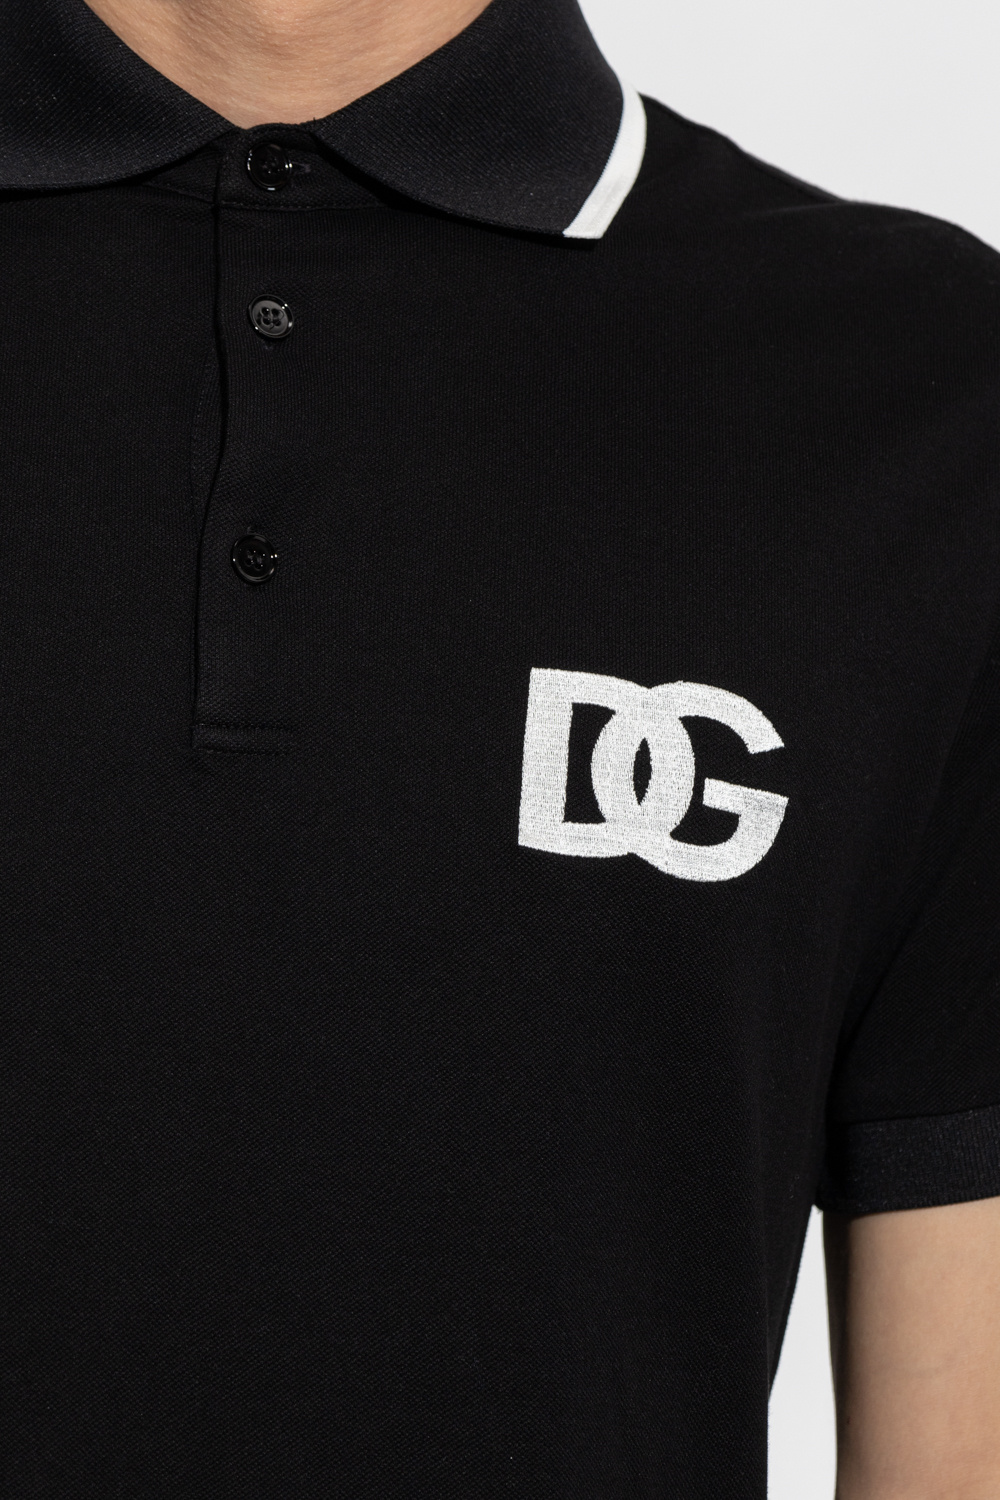 Dolce & Gabbana ribbed long sleeved polo shirt